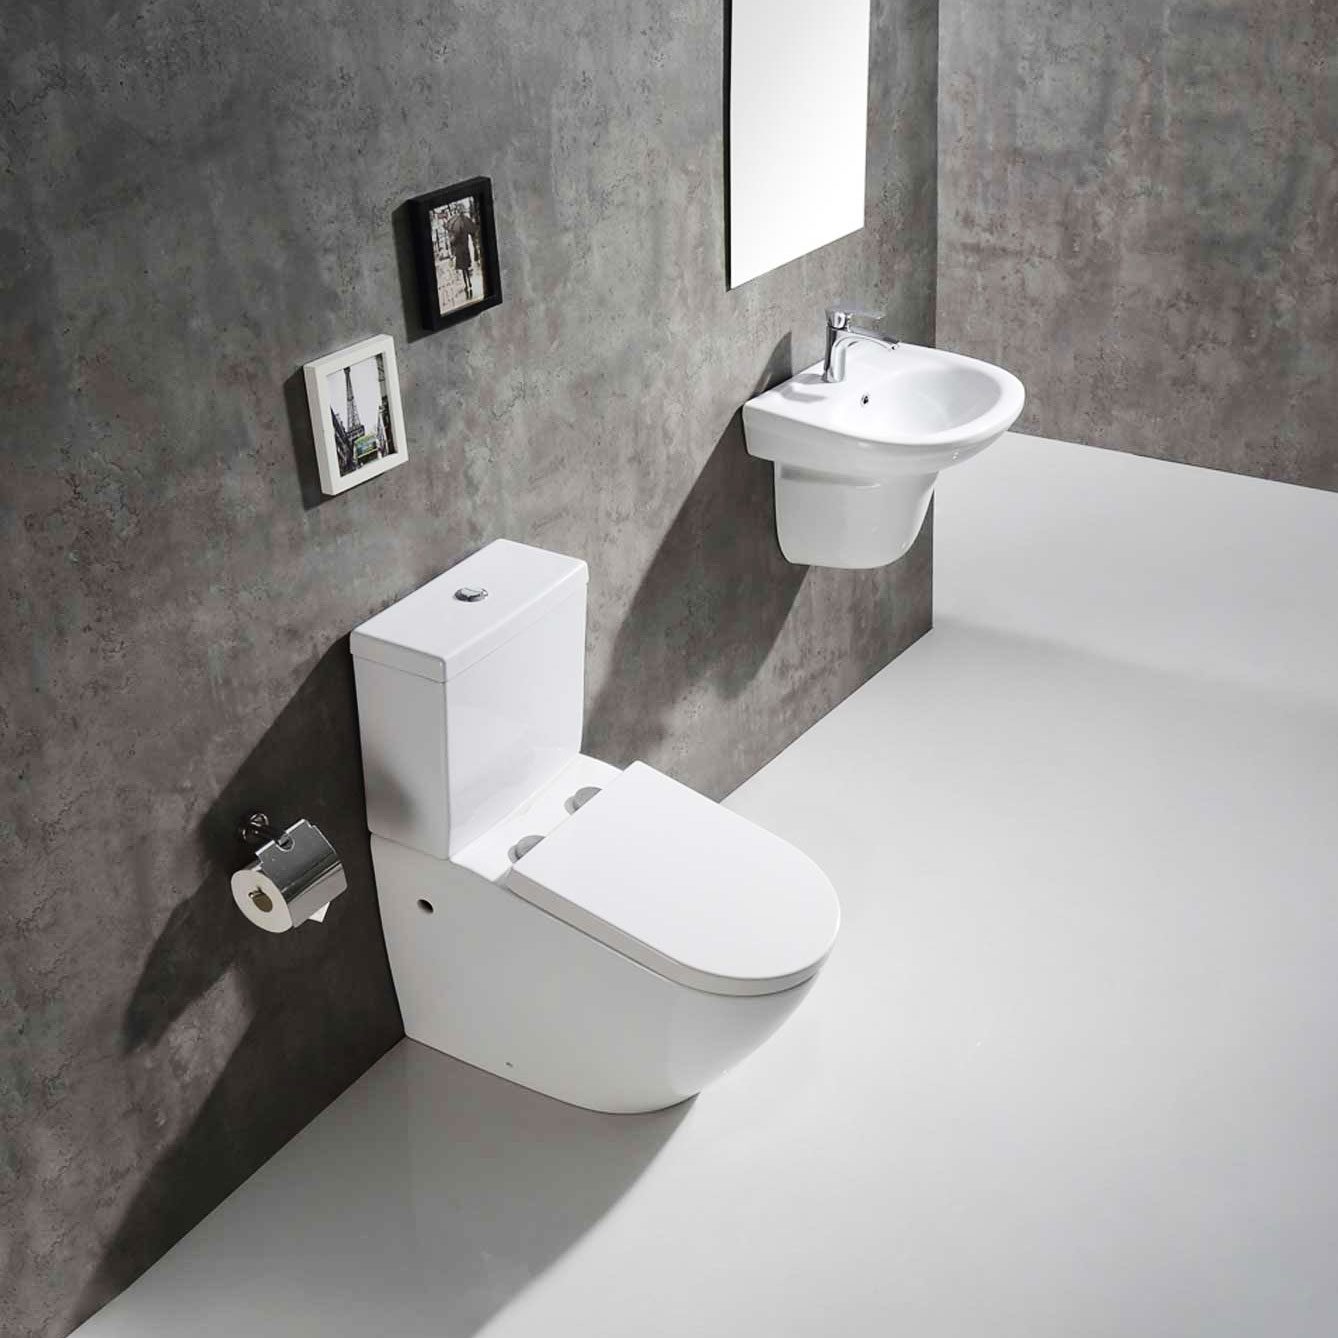 scanty toilet in a modern bathroom